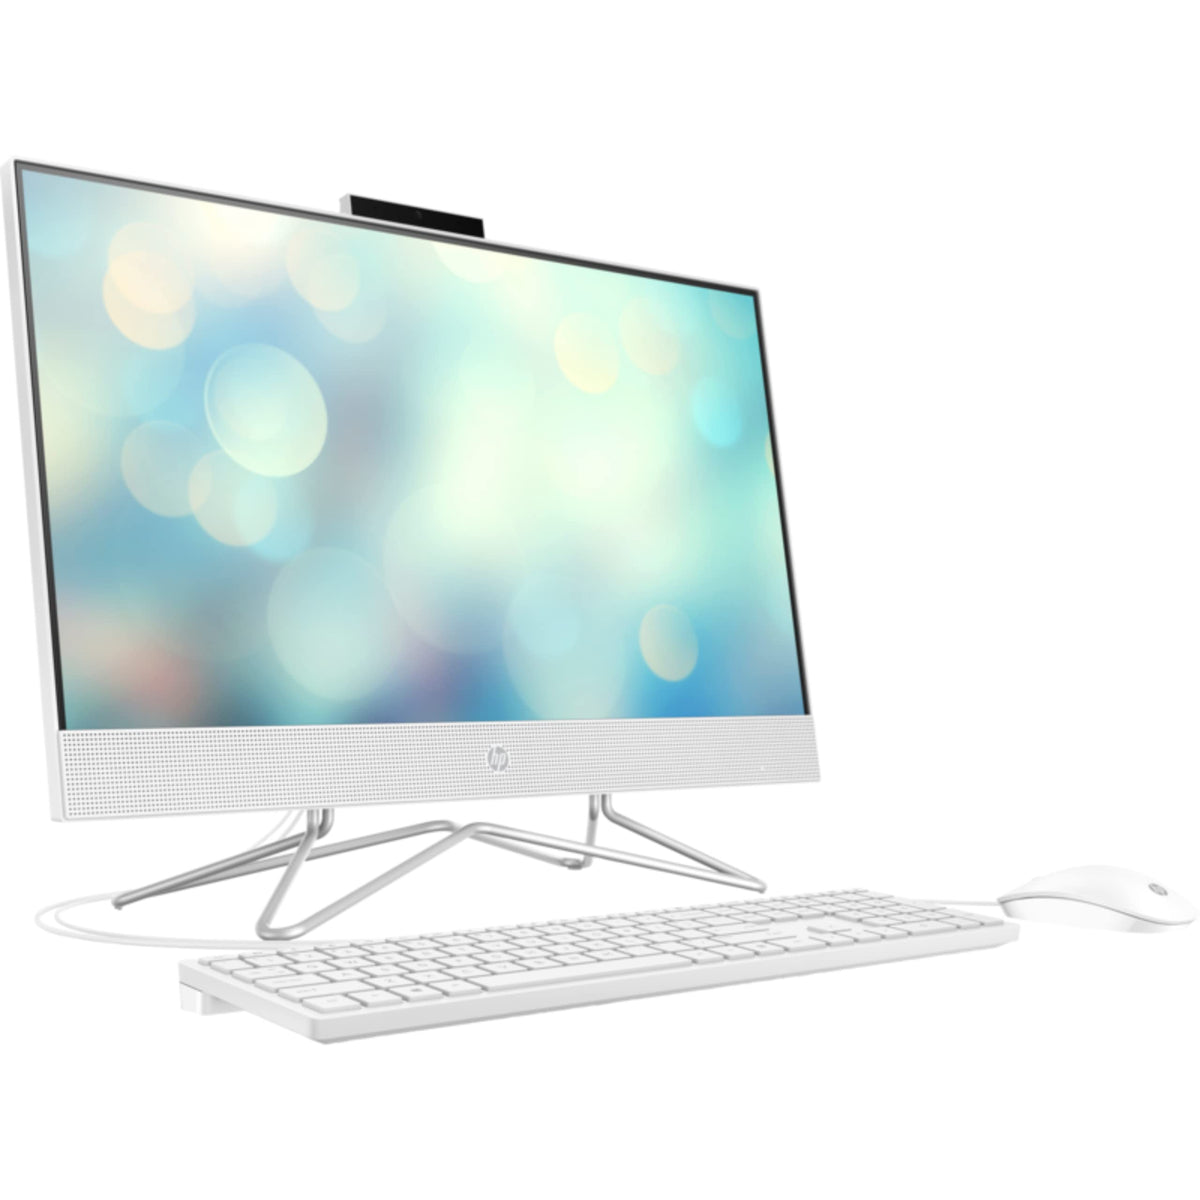 2022 Newest HP All-in-One 24-inch Desktop|12th Generation Intel Core i5-1235U Processor|Intel UHD Graphics|16GB DDR4 RAM|1TB NVMe SSD|23.8" FHD Display|Windows 11|Free Bluetooth Headset| (Snow White)